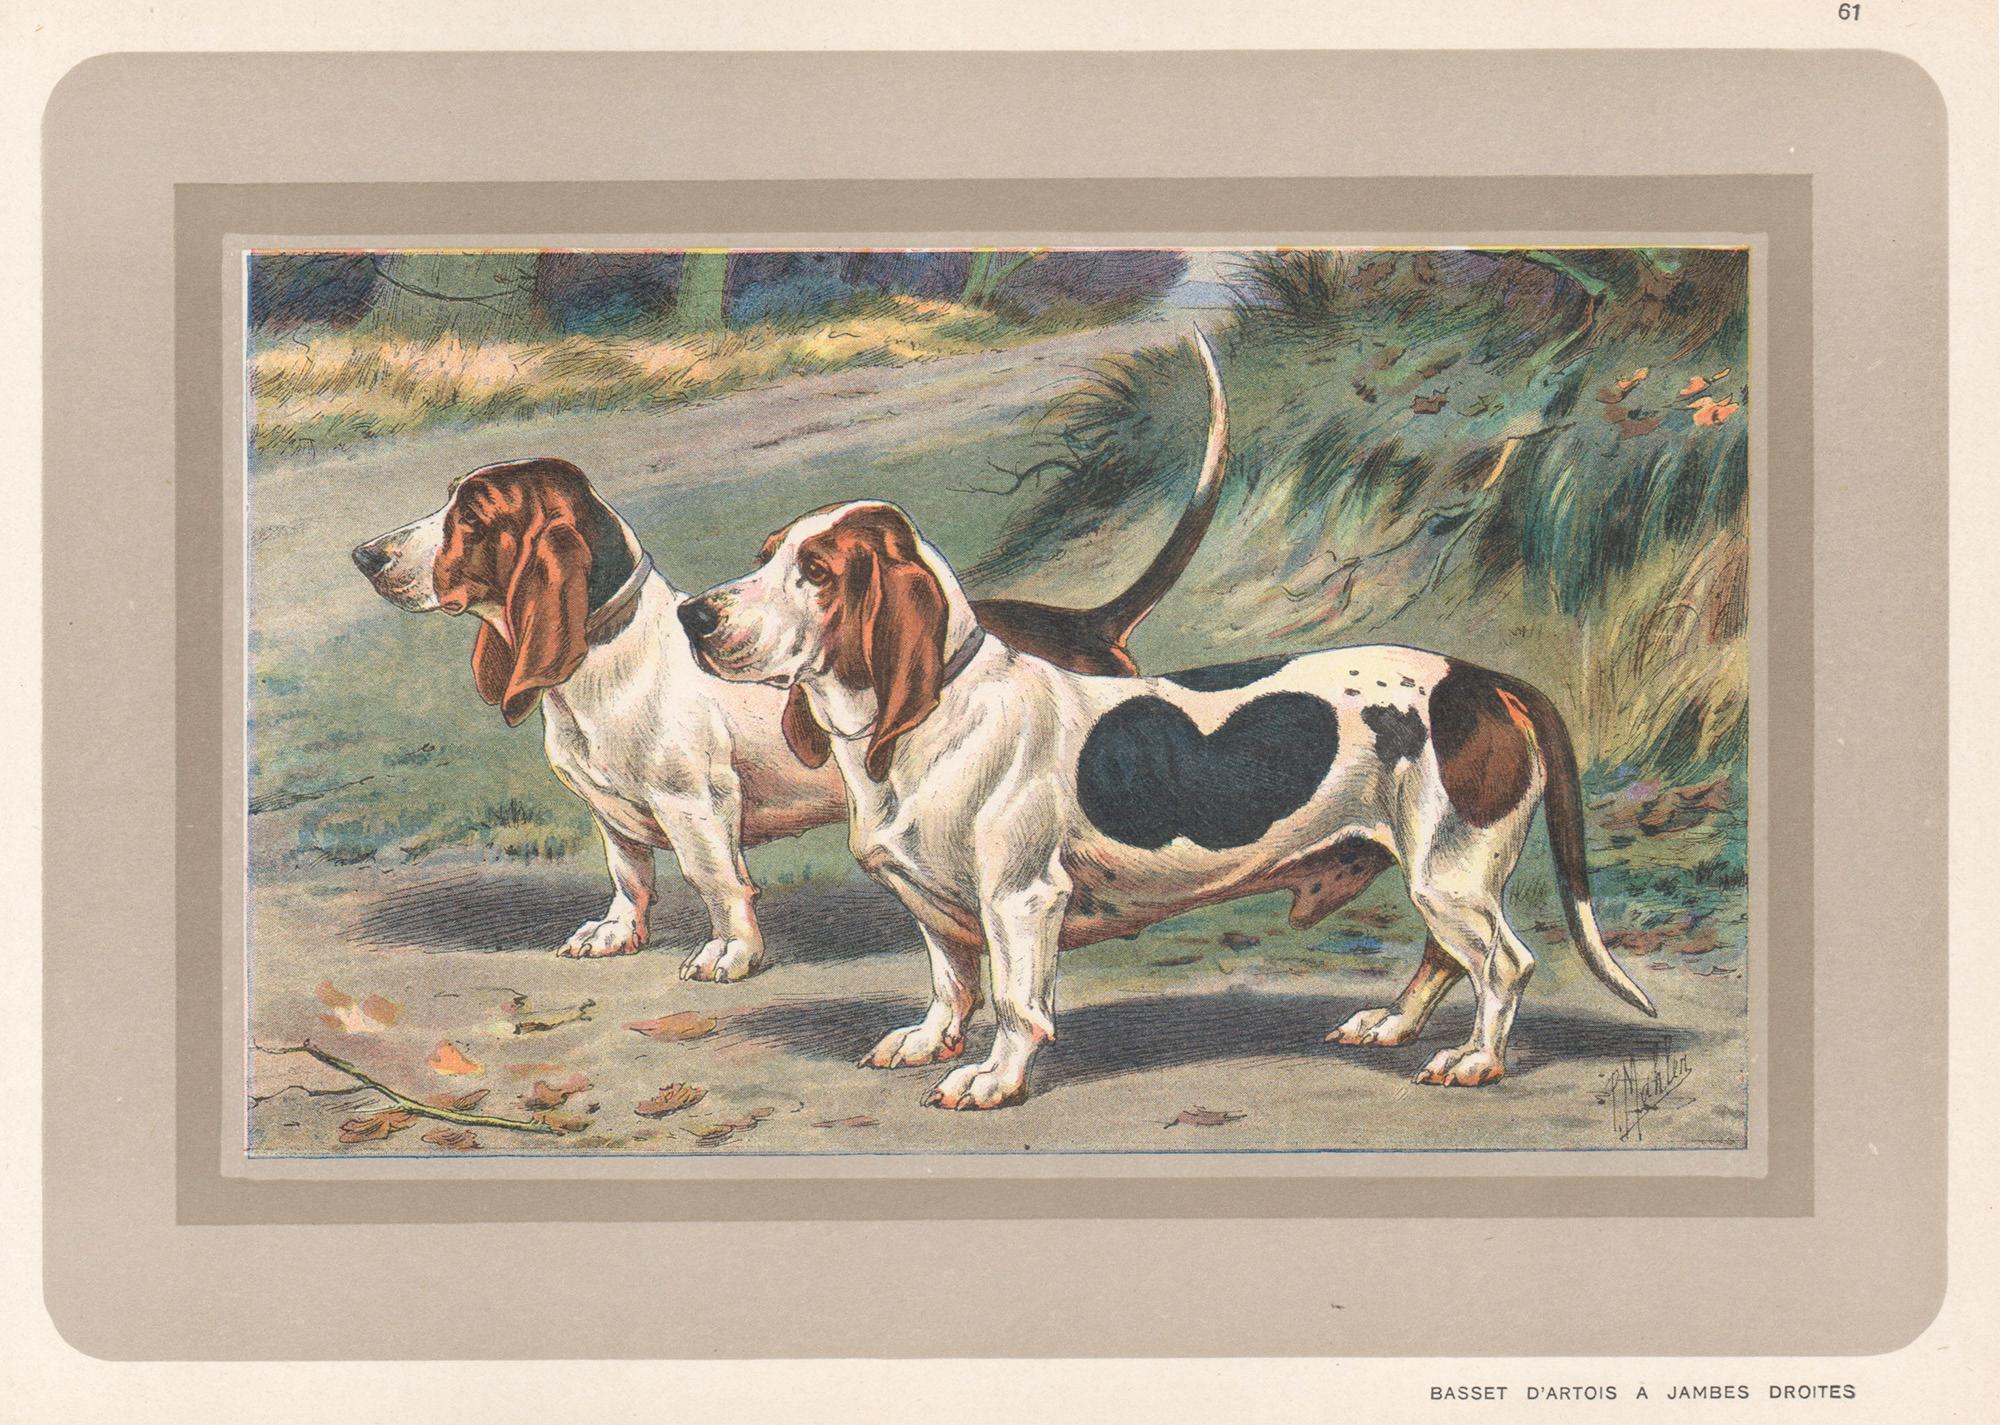 P. Mahler Animal Print - Bassets D'Artois a Jambes Droites, French hound dog chromolithograph print 1930s